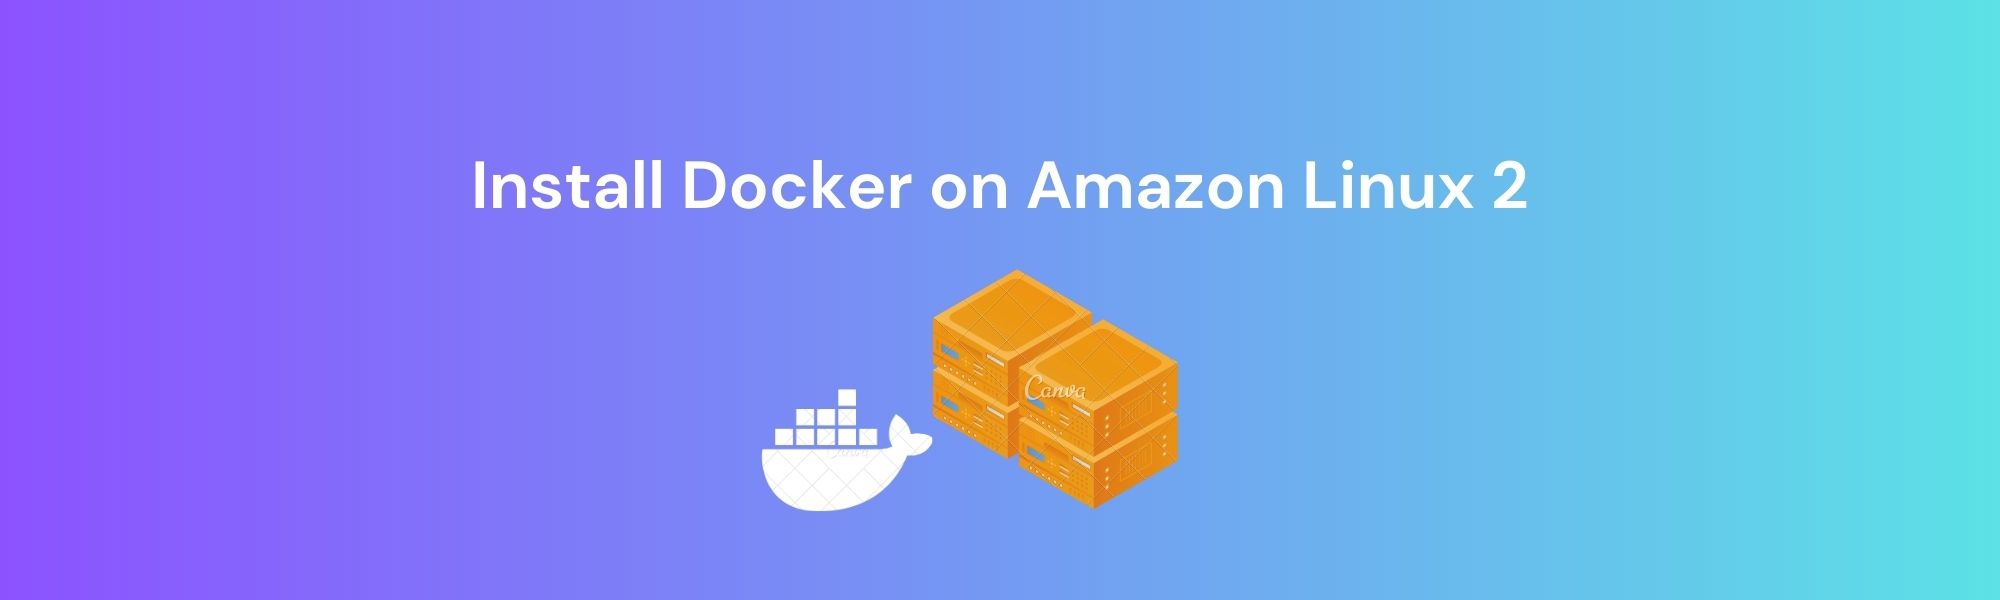 Install Docker on Amazon Linux 2